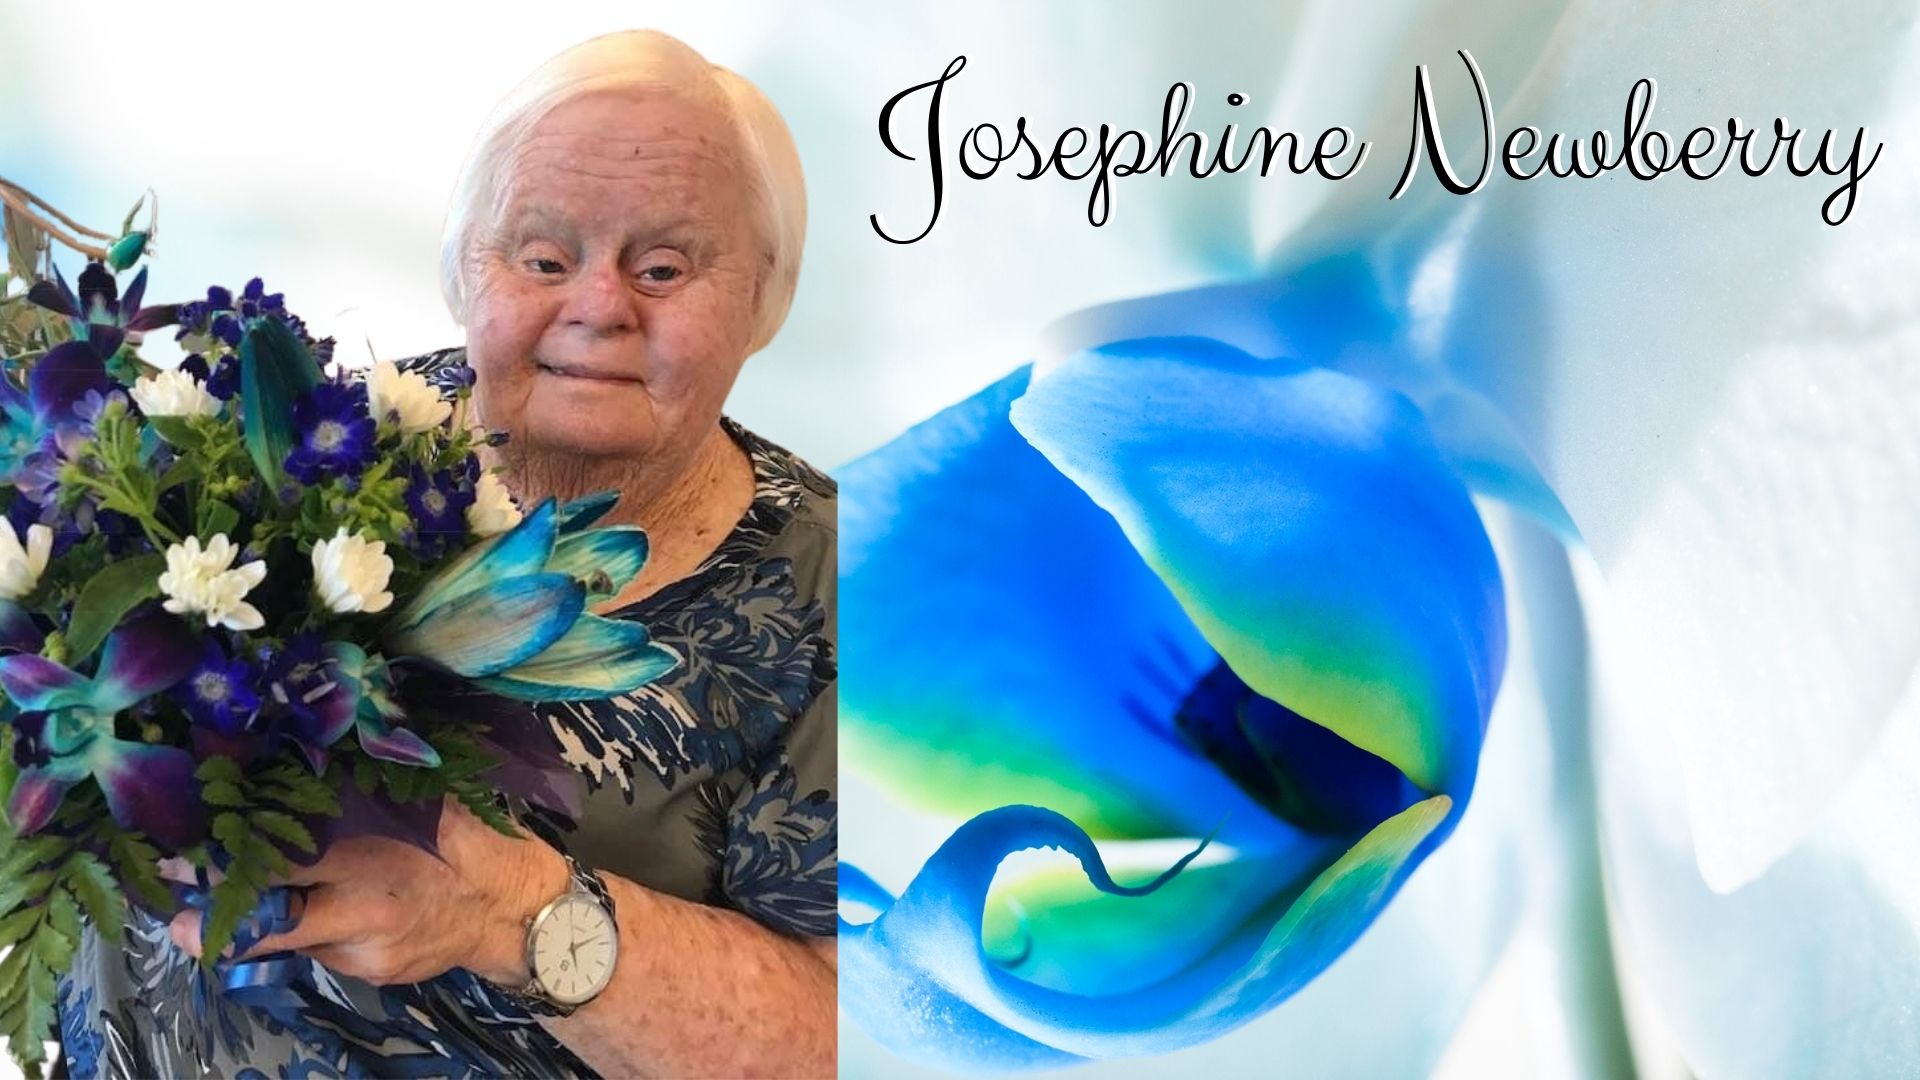 Josephine Newberry